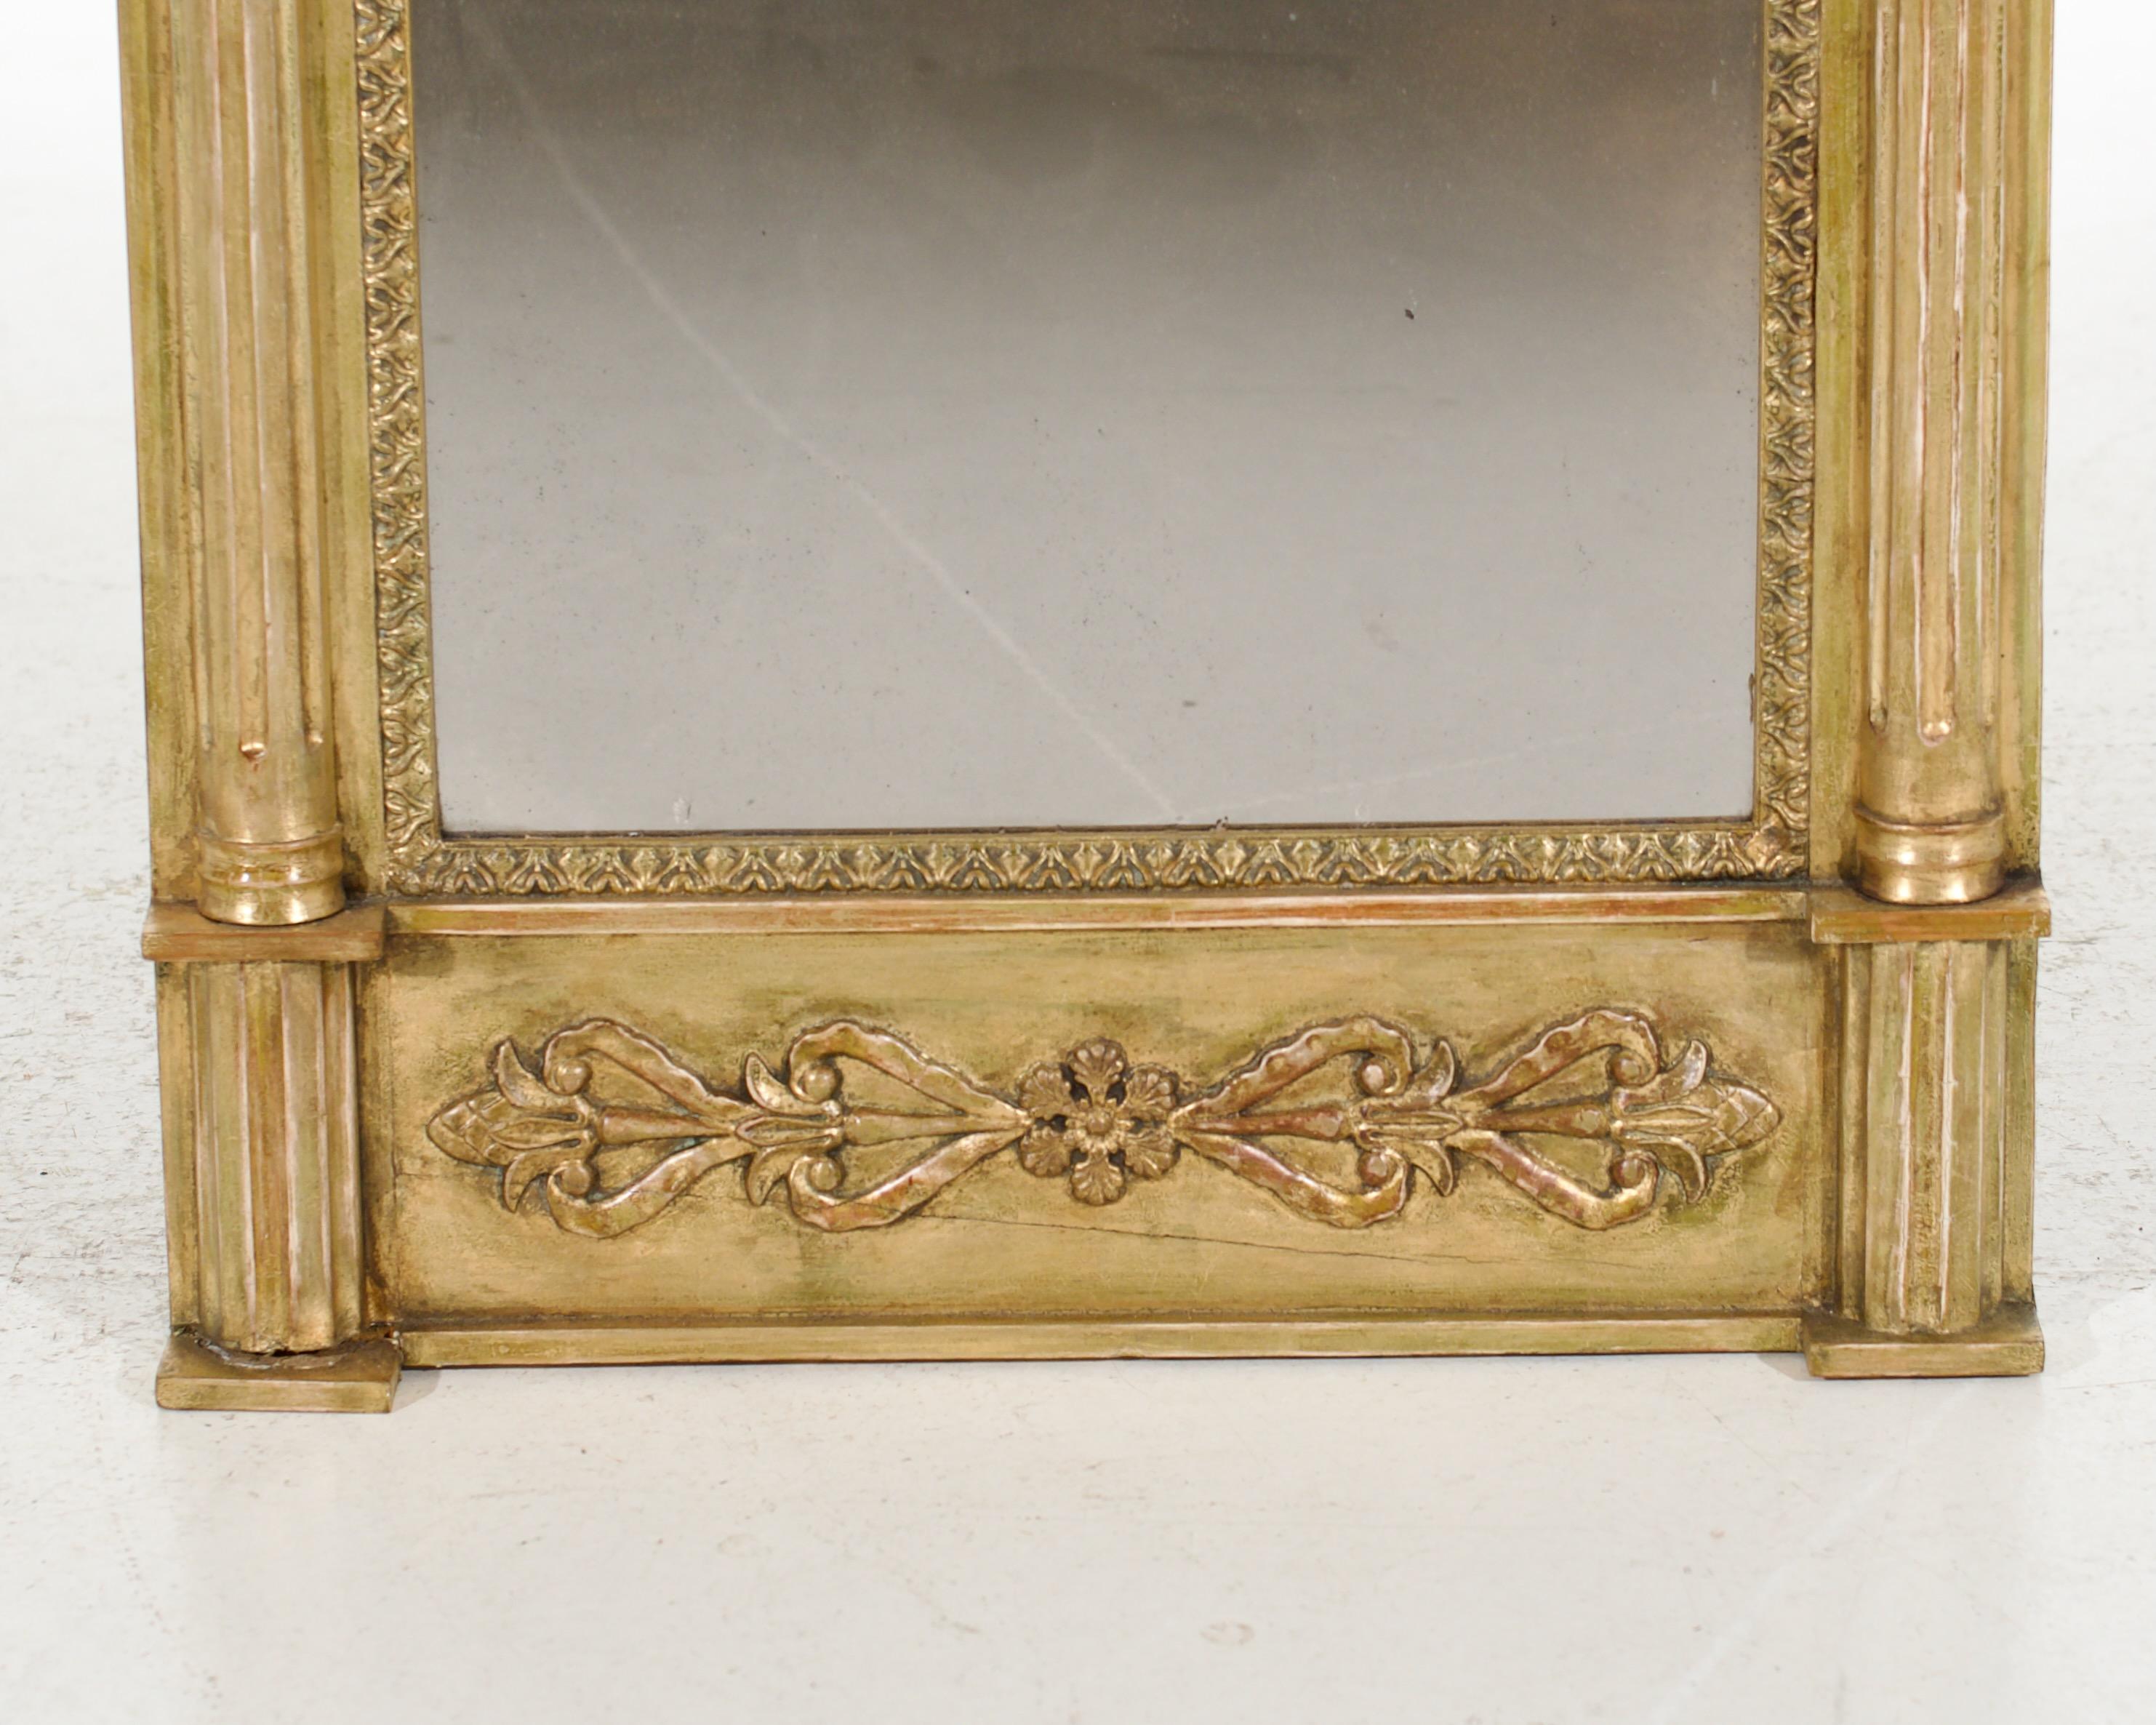 Fine original Swedish and gilded mirror, beautiful carvings, circa 1810.